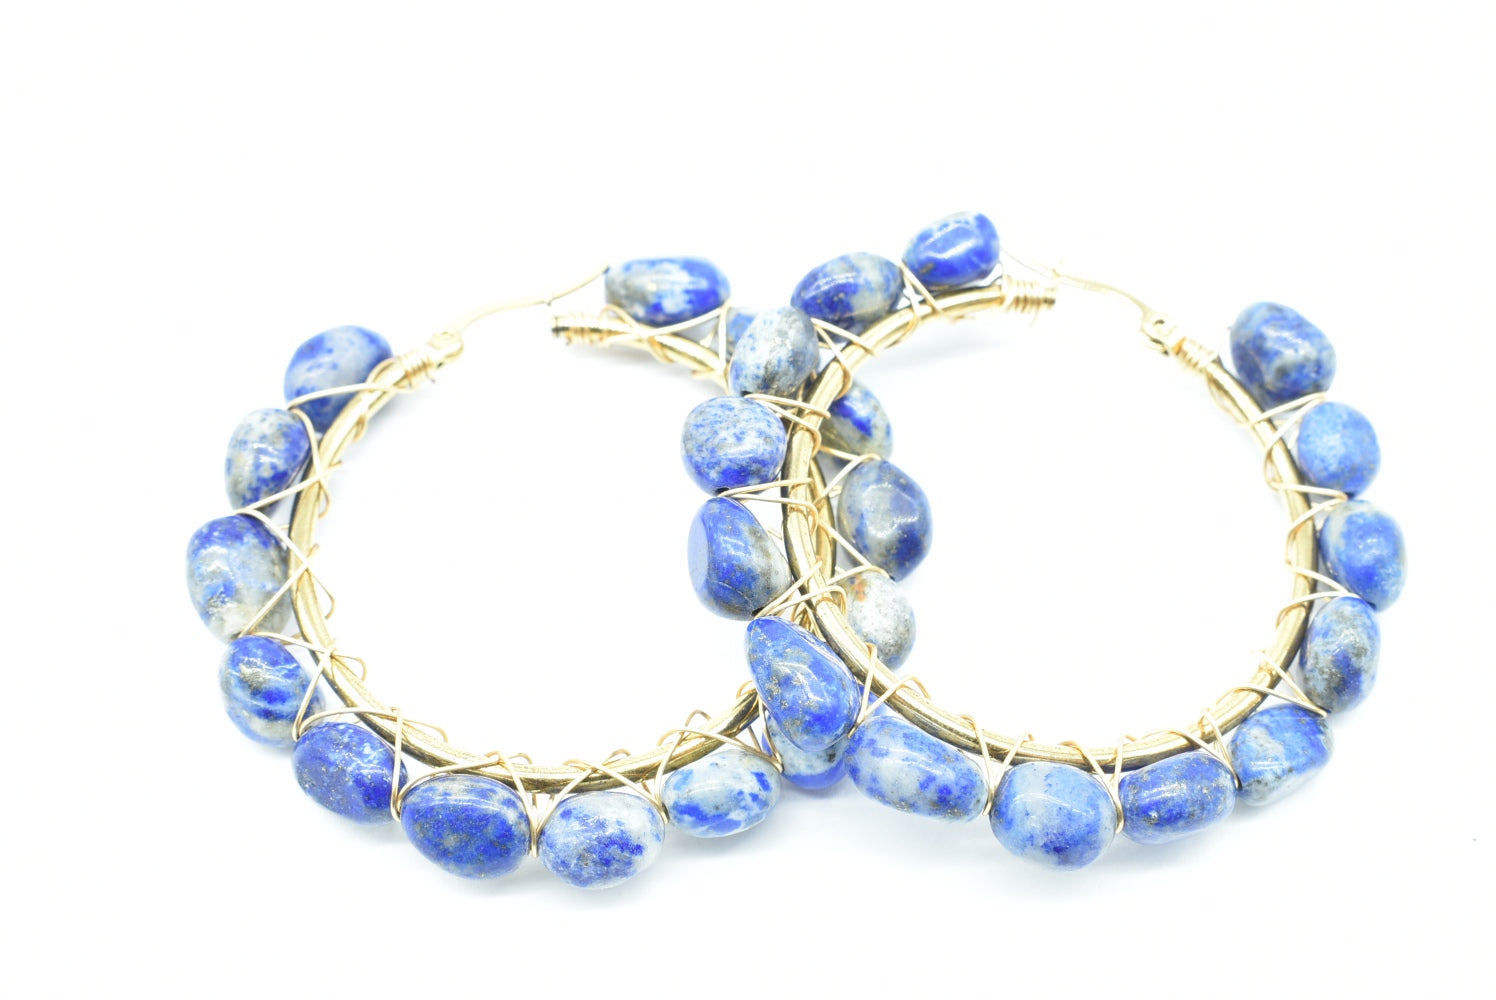 Lapis lazuli stones earrings